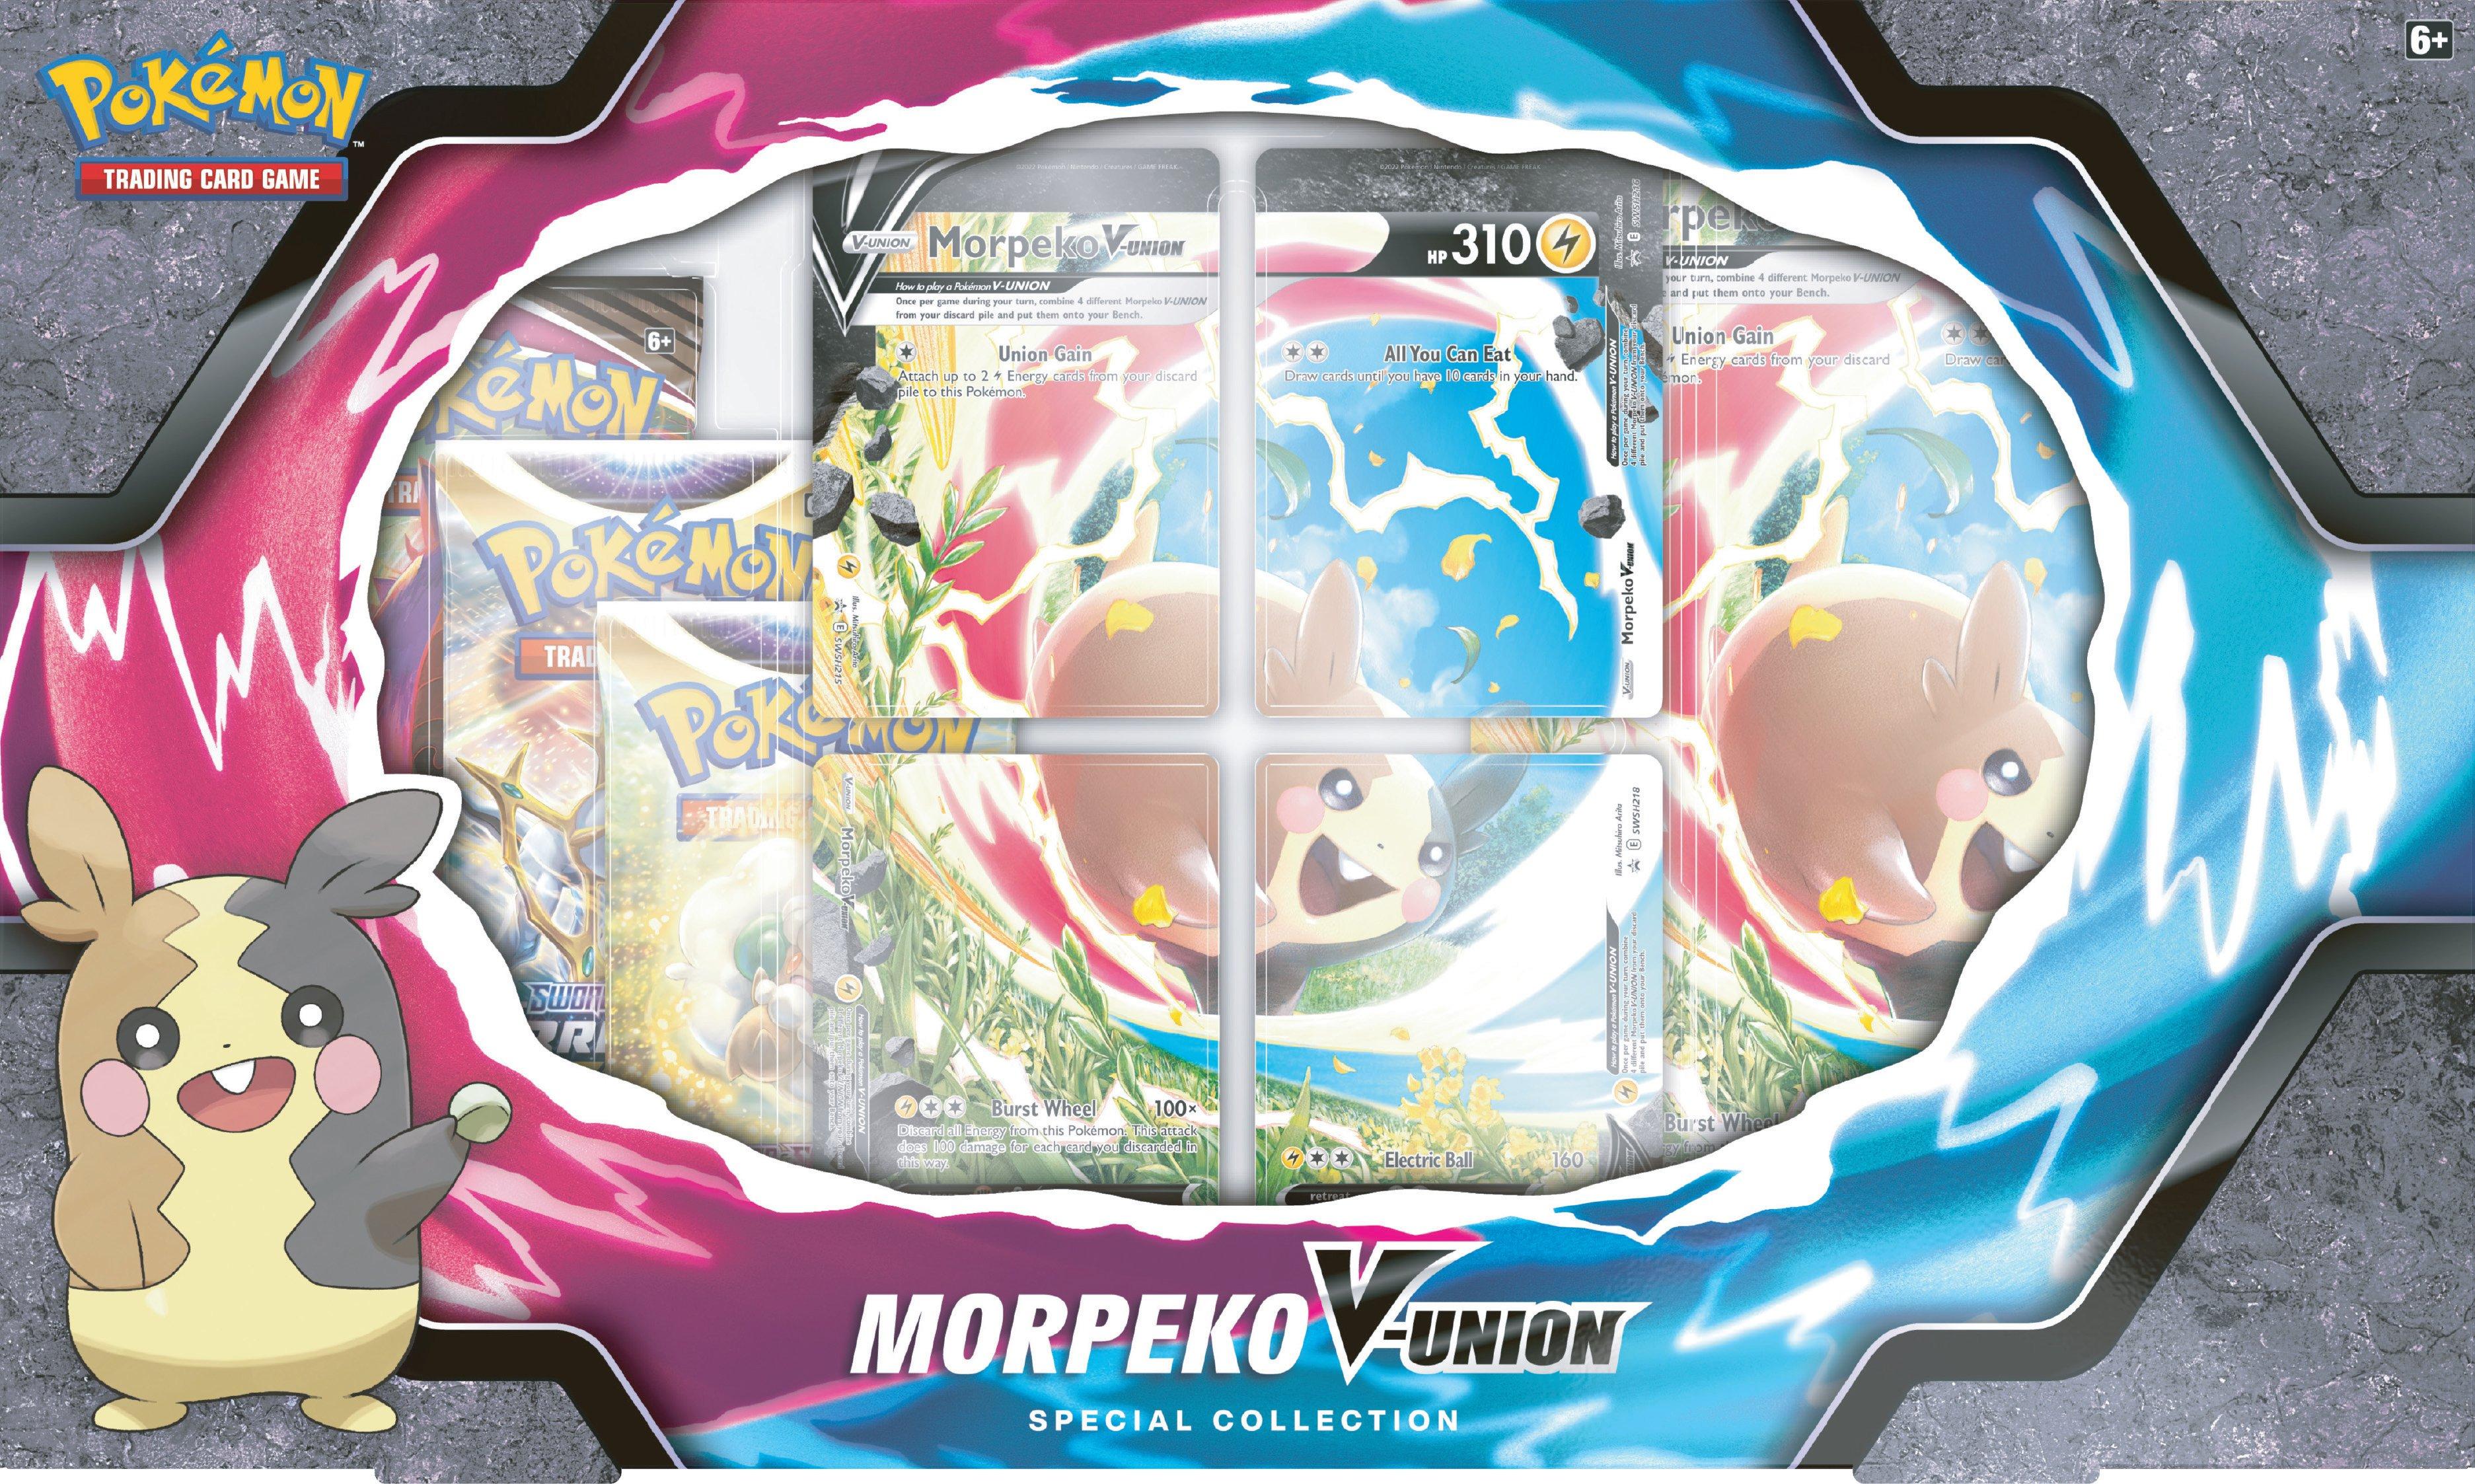 Morpeko V-union Special collection | D20 Games